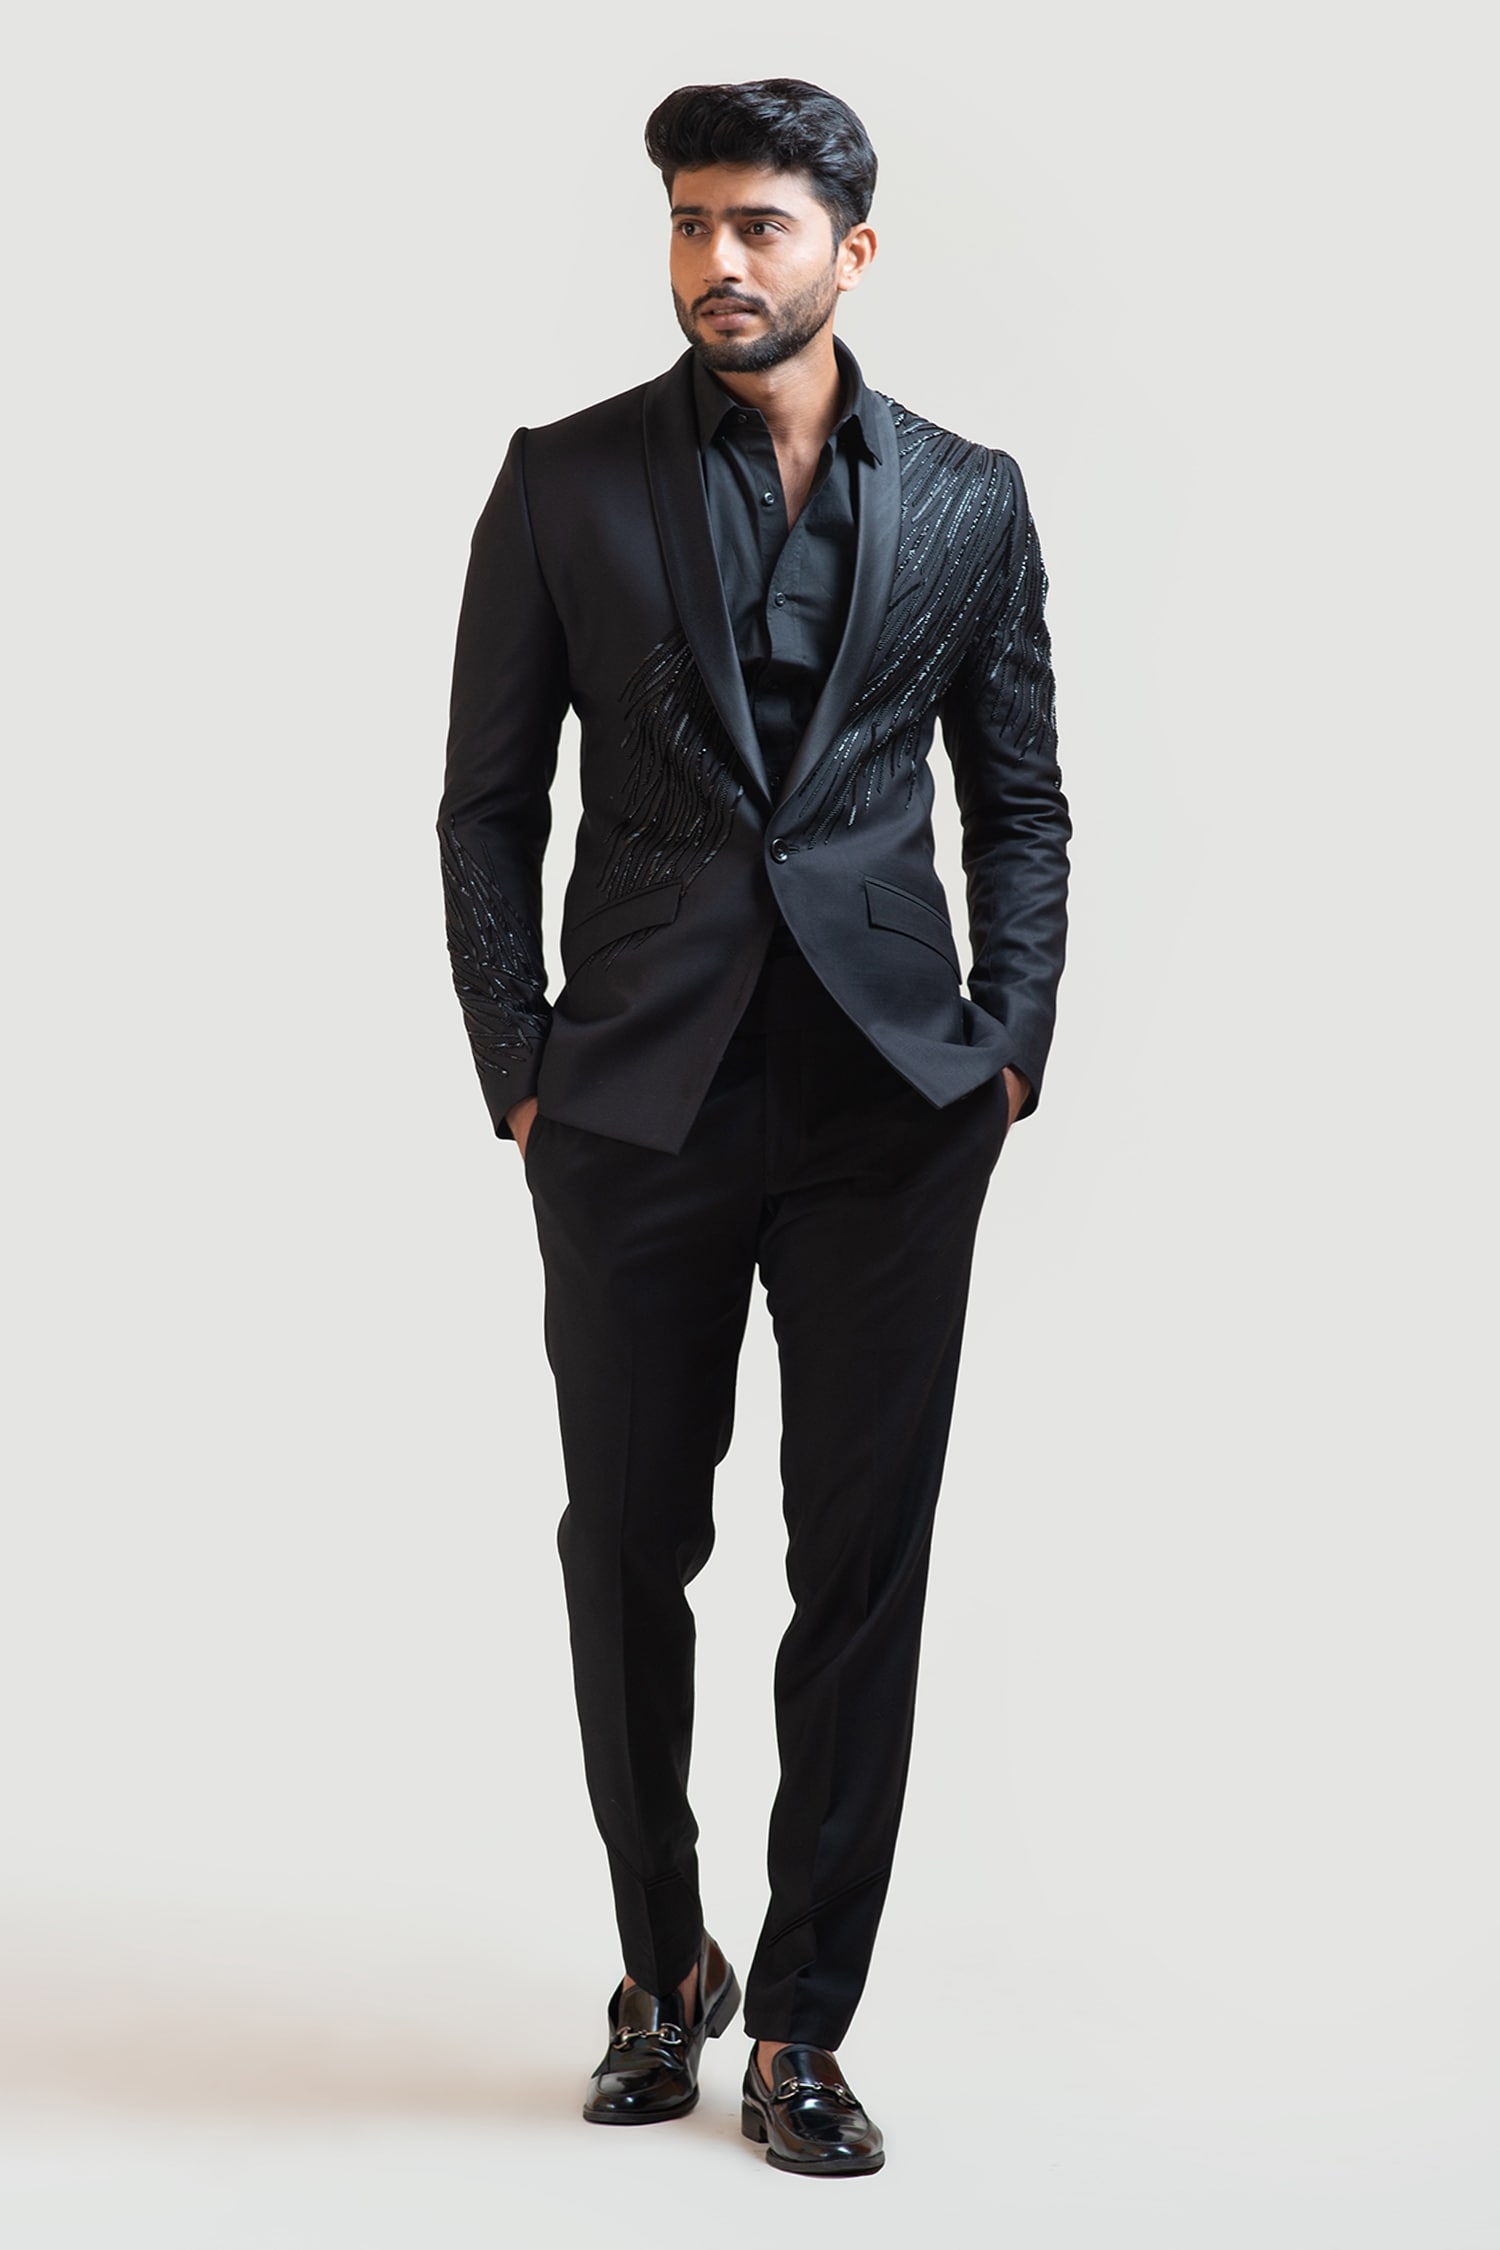 Buy TAHVO Designer Mens Slim Fit Black Solid BlazerFormal Blazer for Men  StylishCoat for WeddingBlazers for Men Stylish Wedding Trouser shuit for  Men at Amazonin